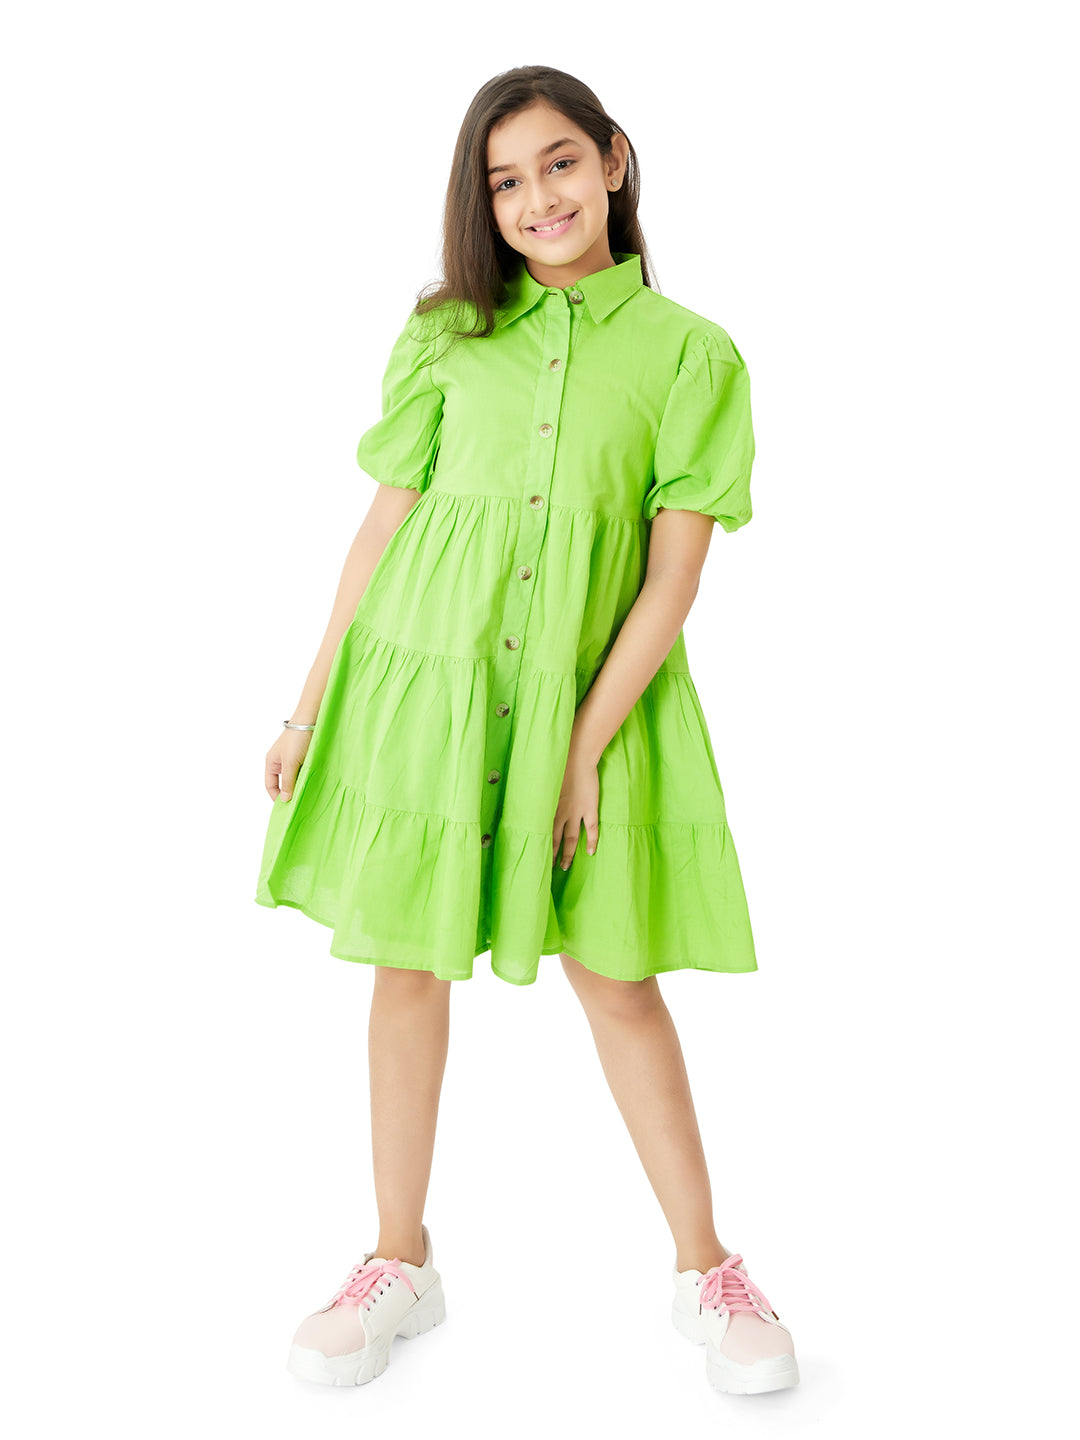 Neon Green Cotton Dress for Girls